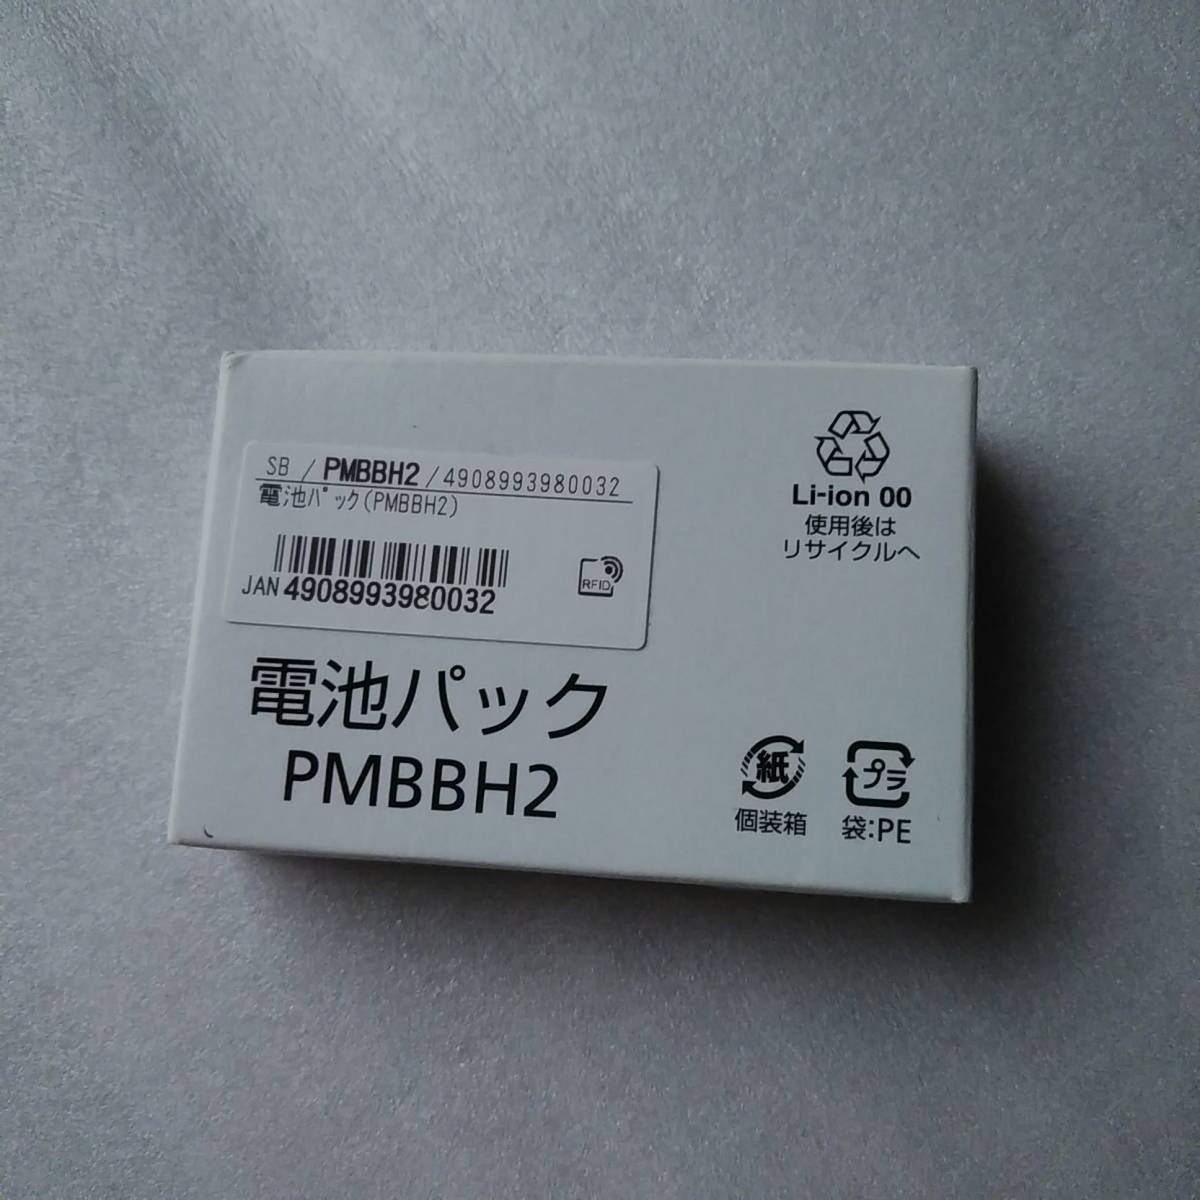 Softbank 電池パック PMBBH2 COLOR LIFE 5 WATERPROOF 401PM用_画像1